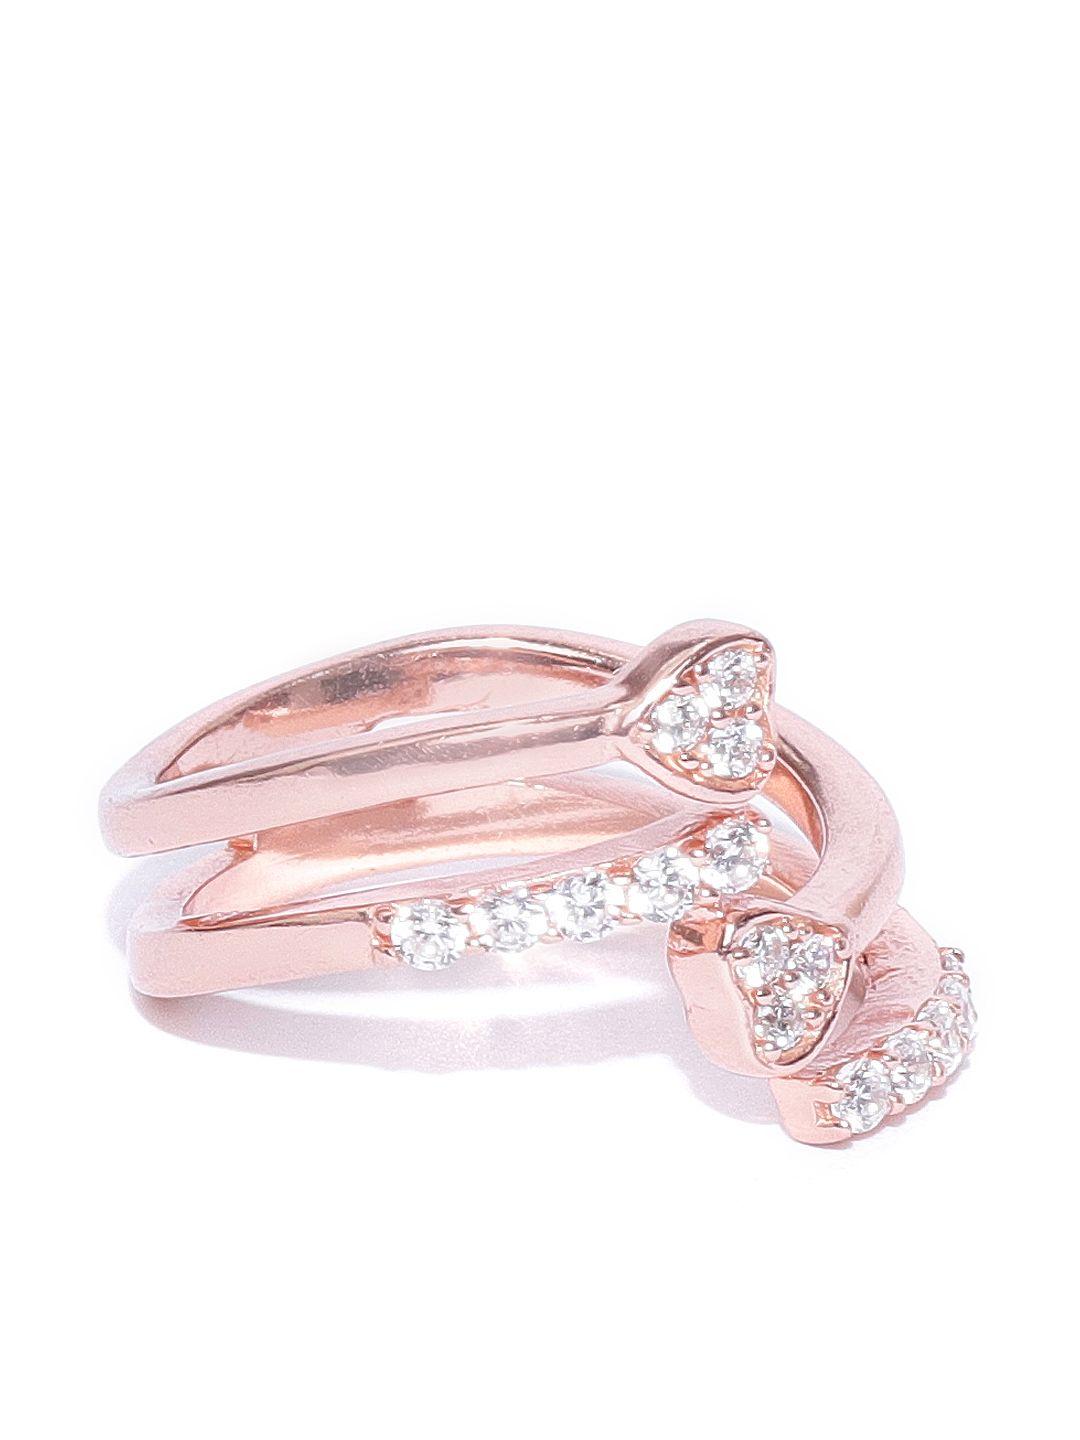 carlton-london-rose-gold-plated-cz-studded-finger-ring